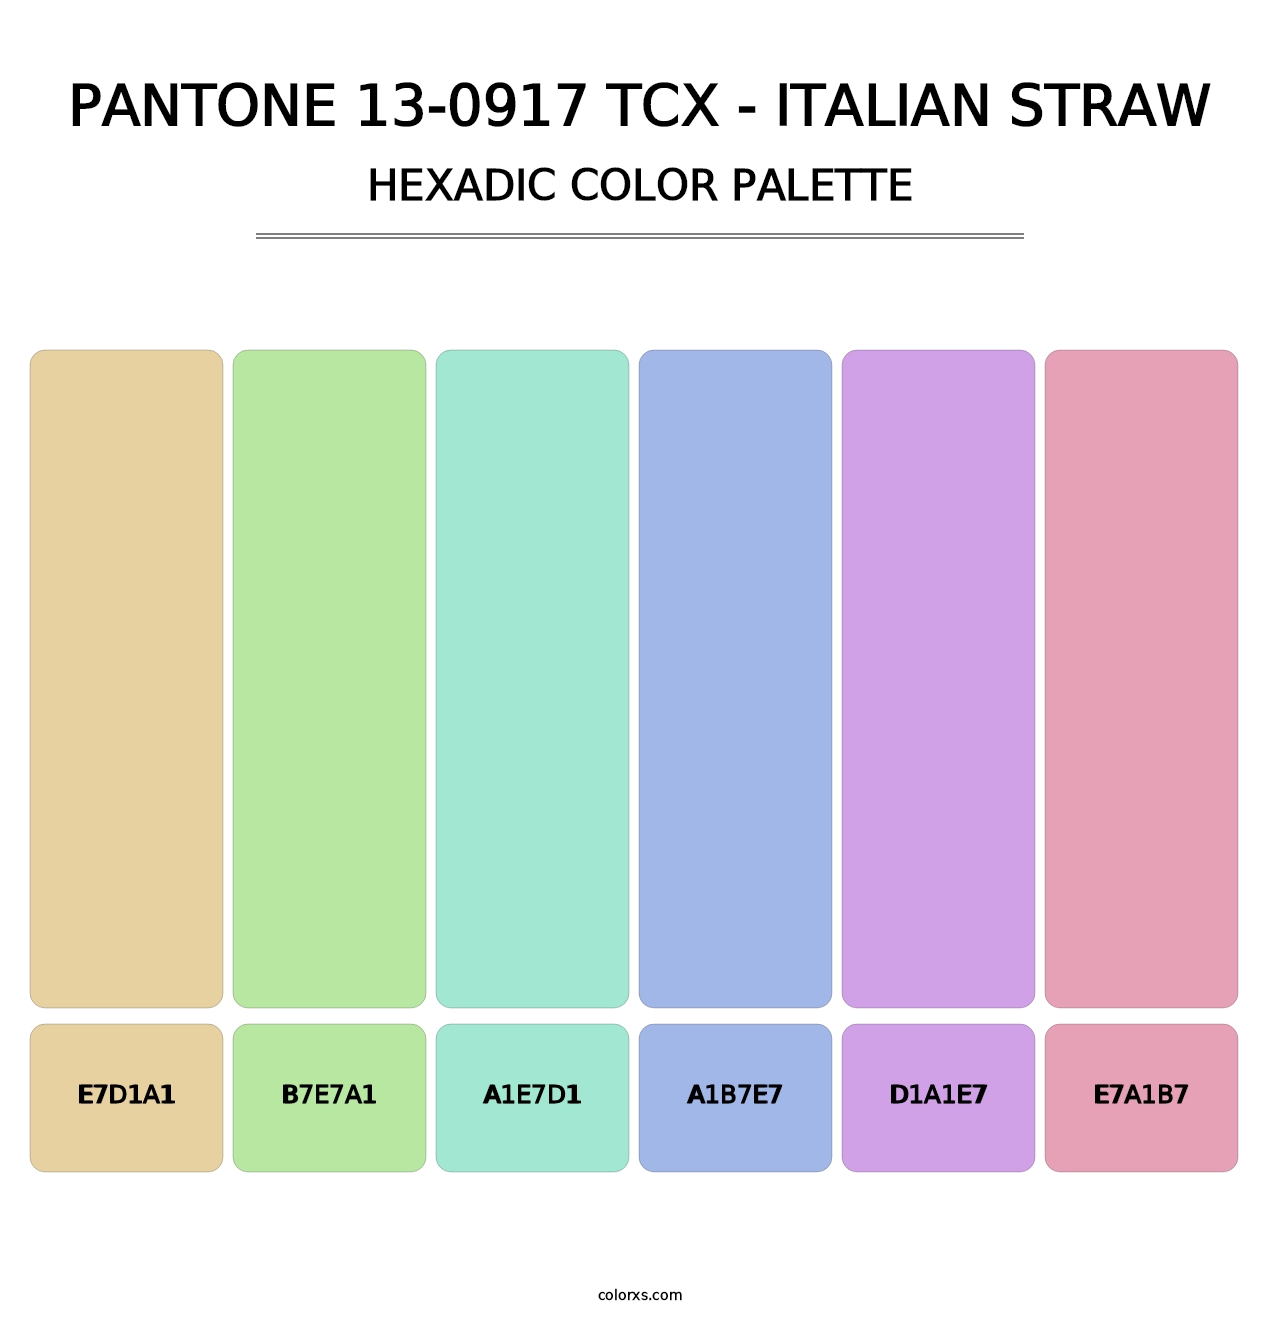 PANTONE 13-0917 TCX - Italian Straw - Hexadic Color Palette